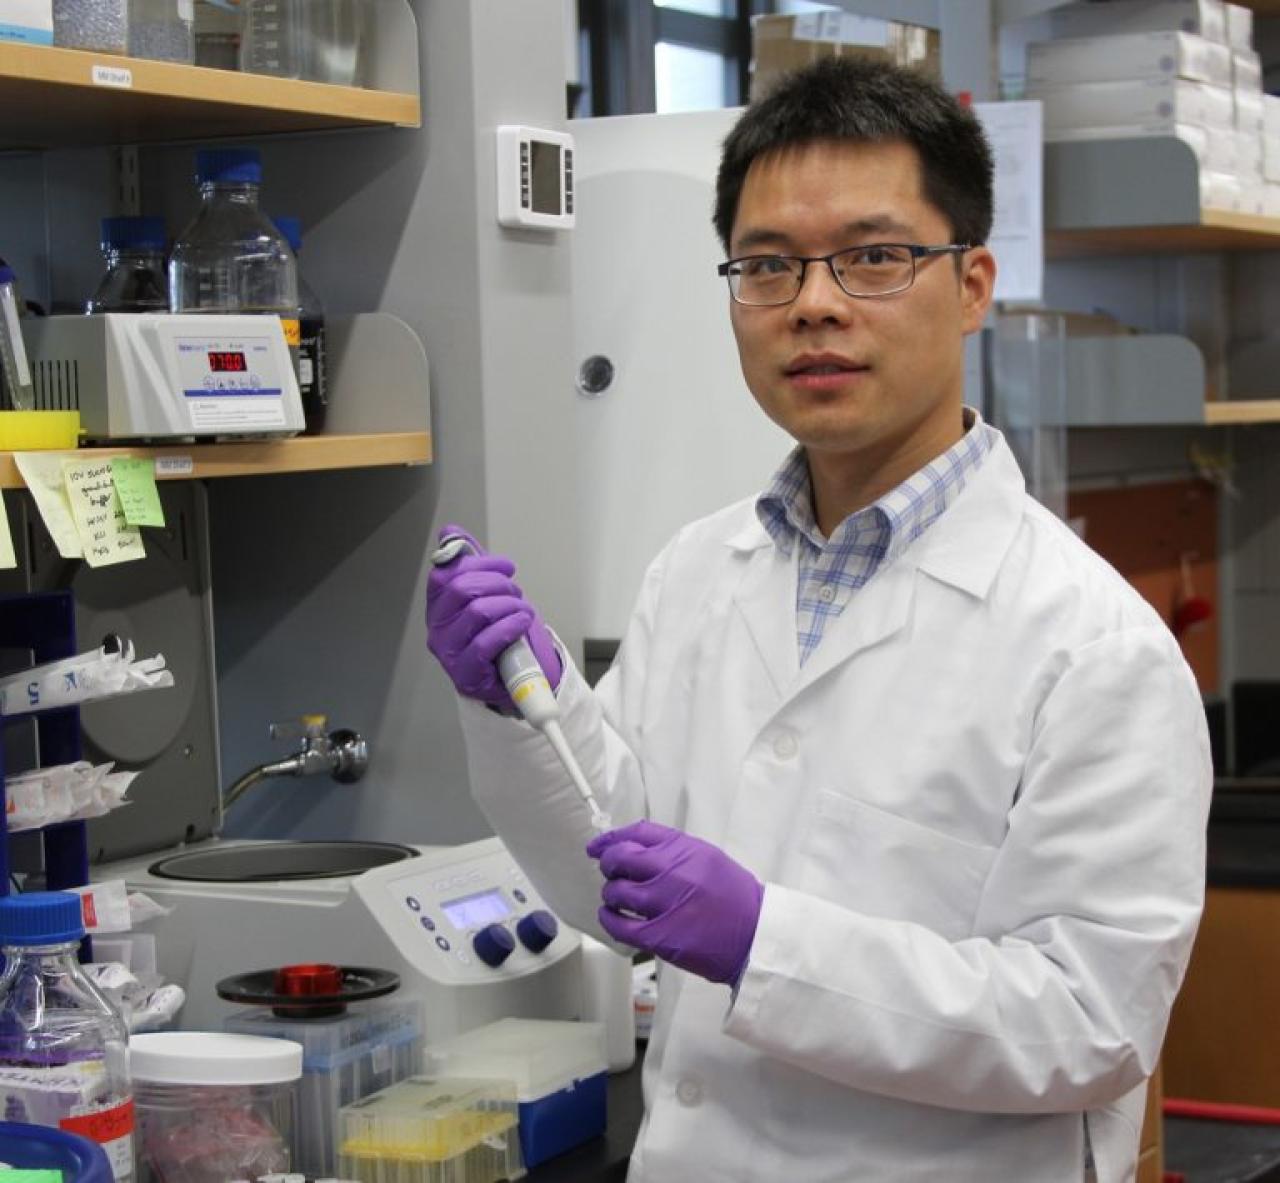 Xuebing Wu, PhD, working in the lab